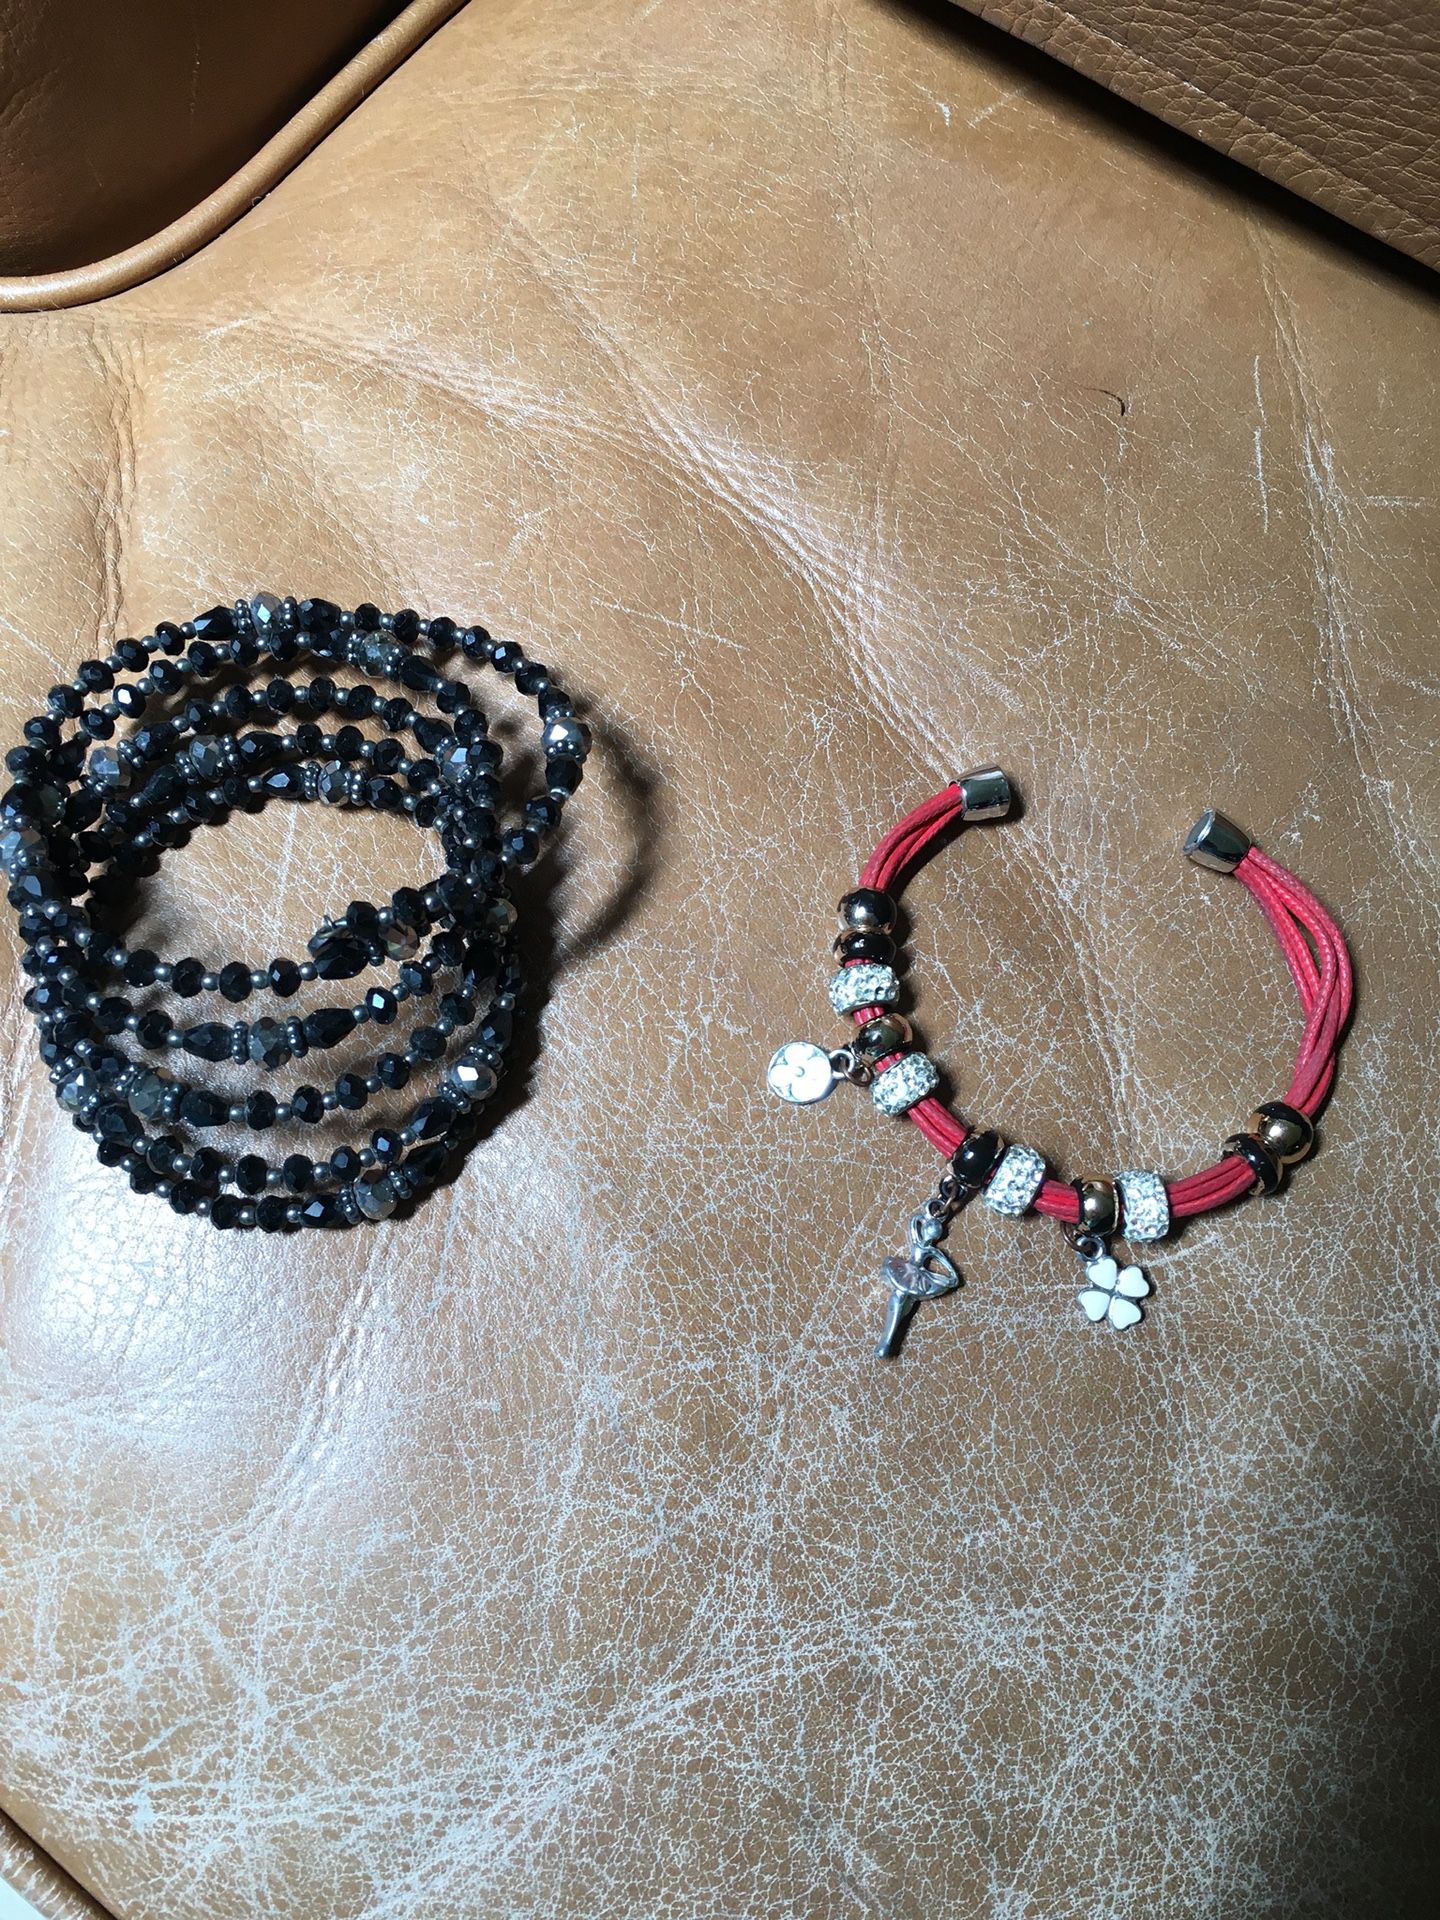 Black crystal slip on bracelet/red rope magnet bracelet with charms $3 each